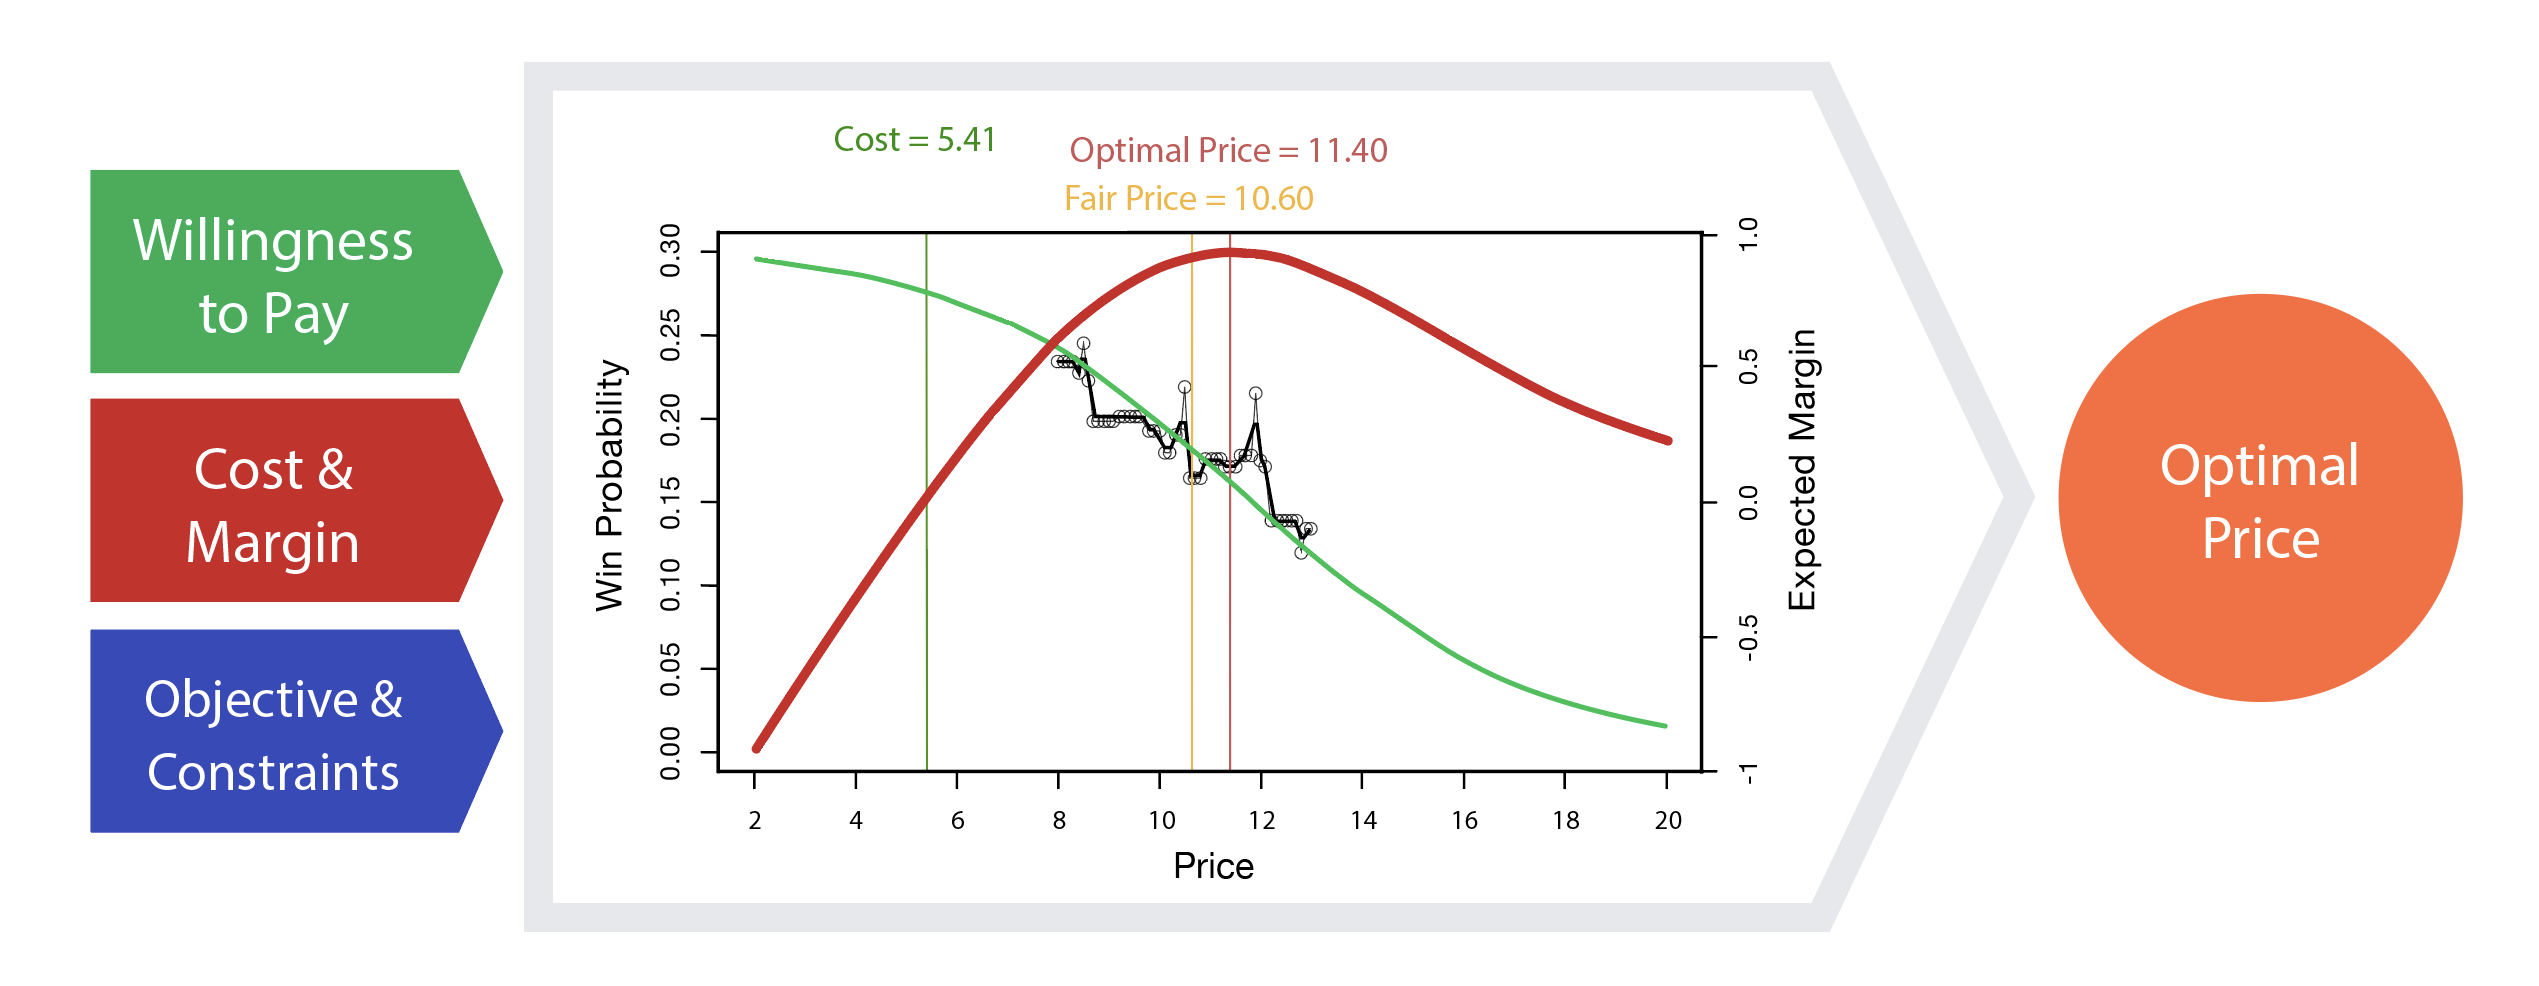 price-optimization-factors